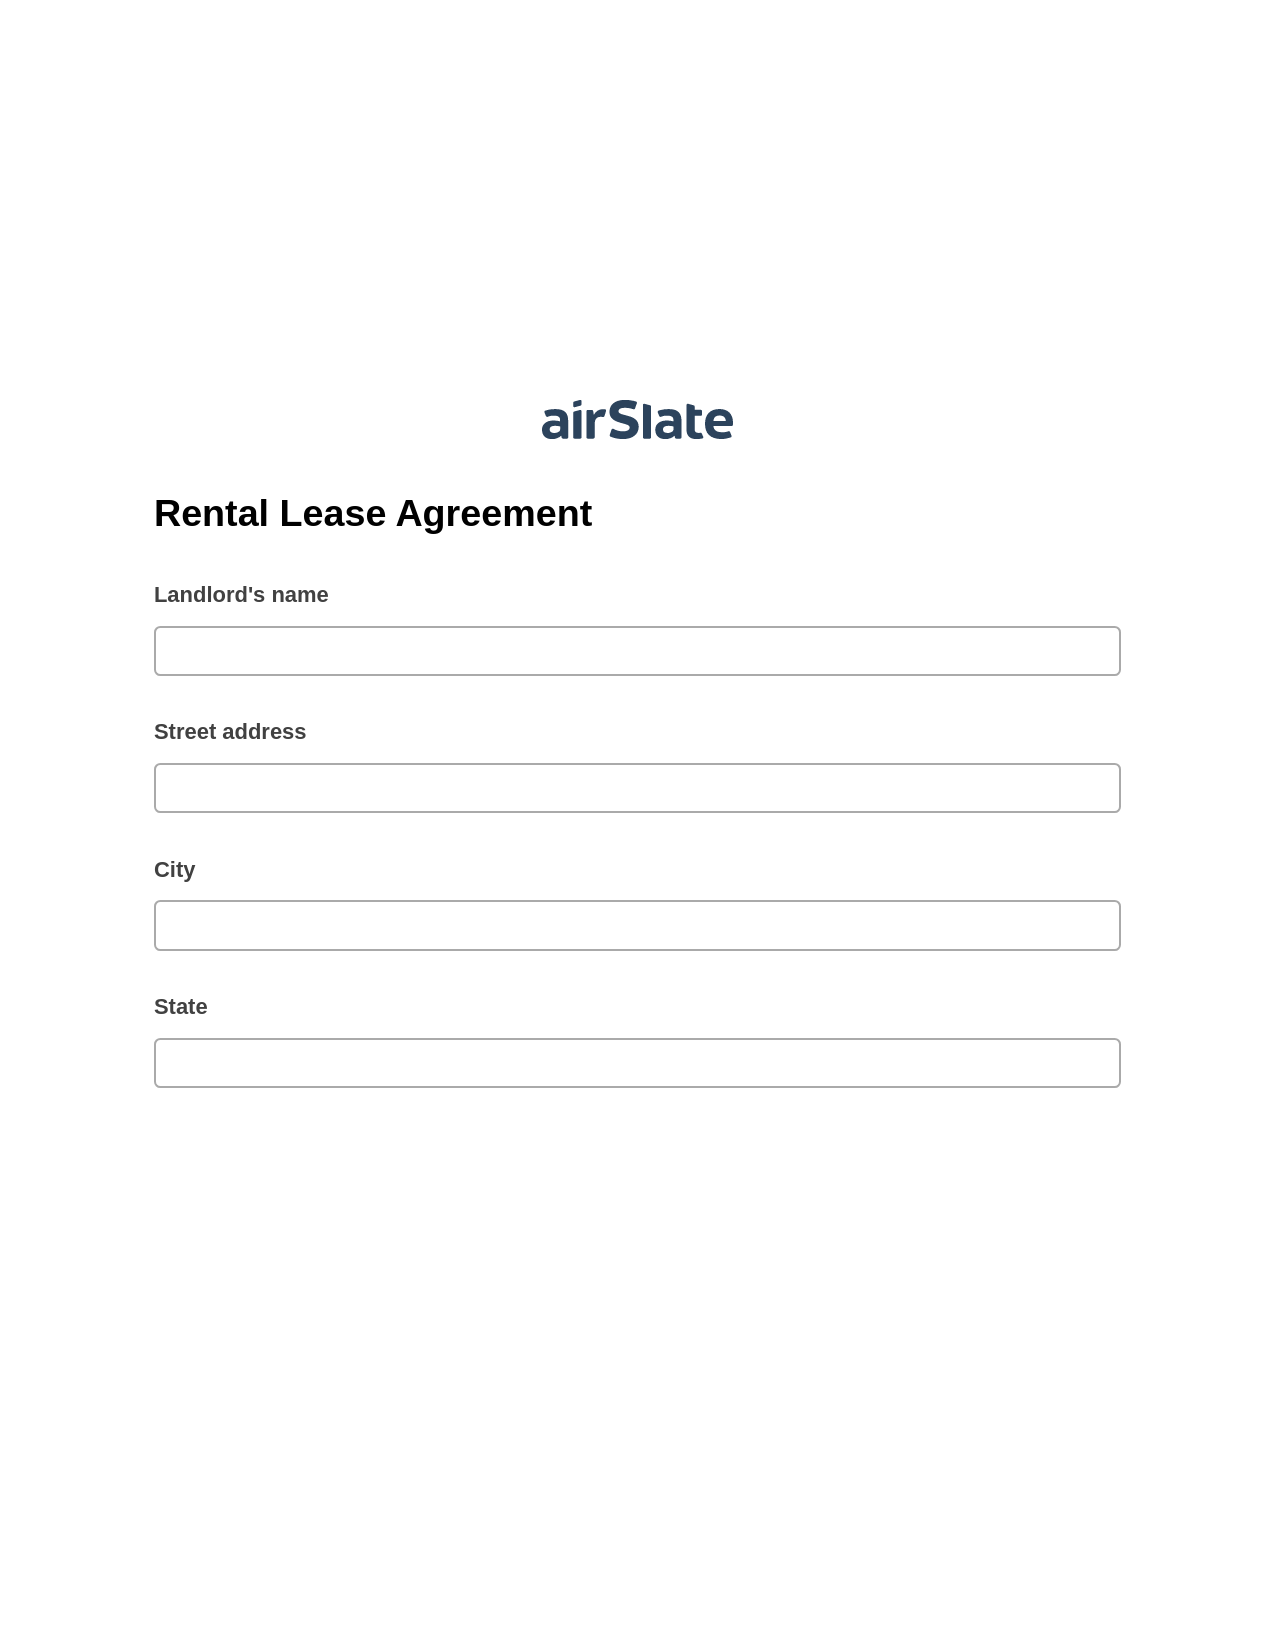 Rental Lease Agreement Pre-fill Dropdowns from Smartsheet Bot, Webhook Bot, Email Notification Postfinish Bot